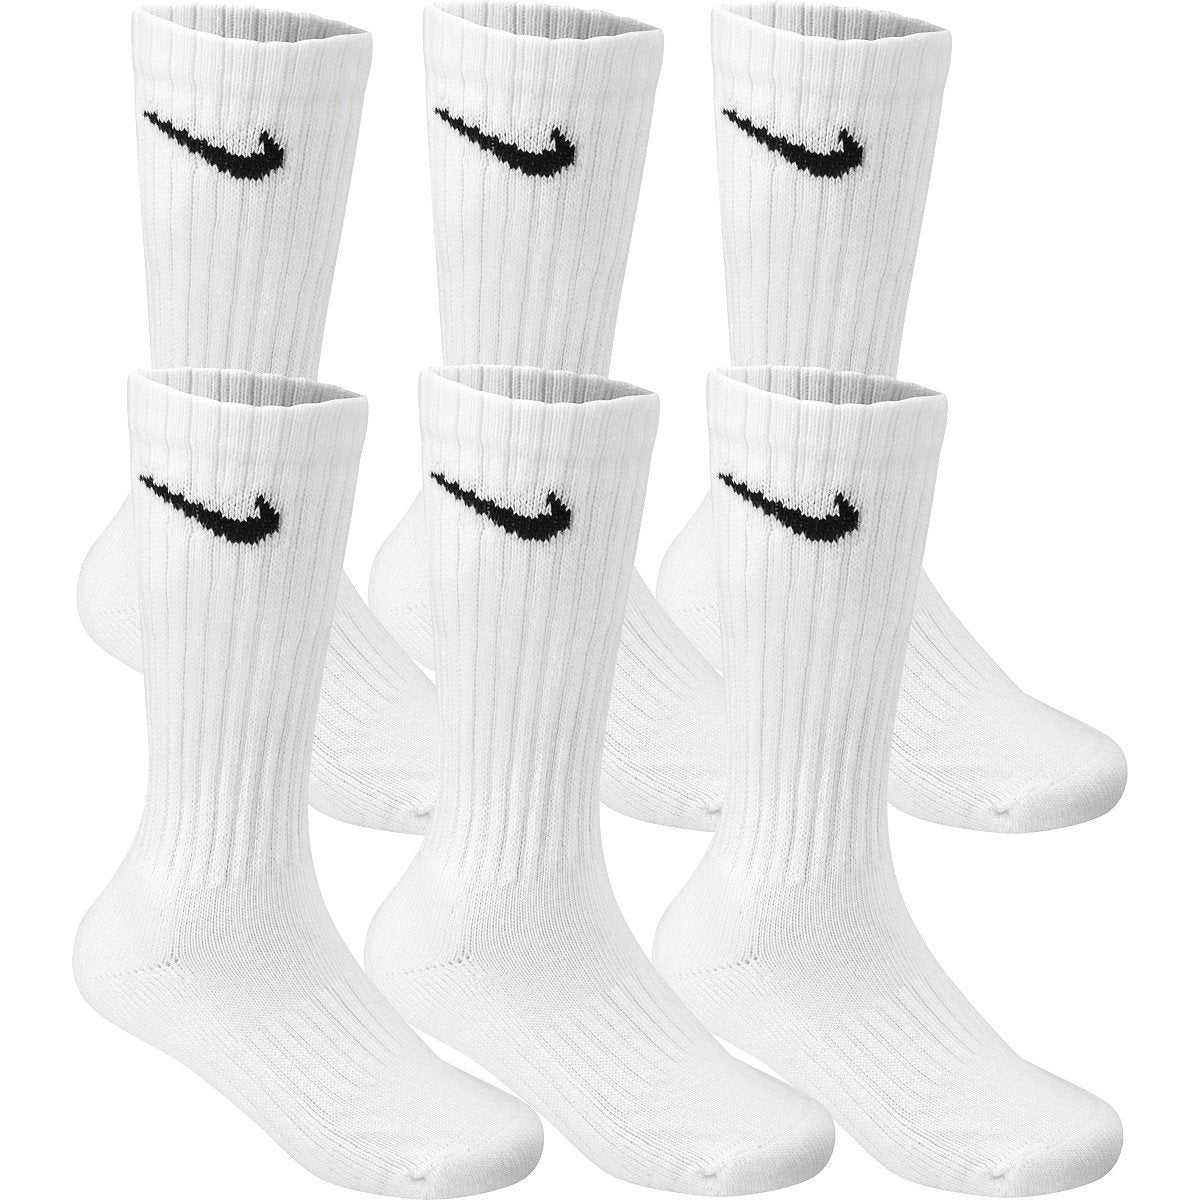 Nike Men's Performance Cotton Cushioned Crew Socks